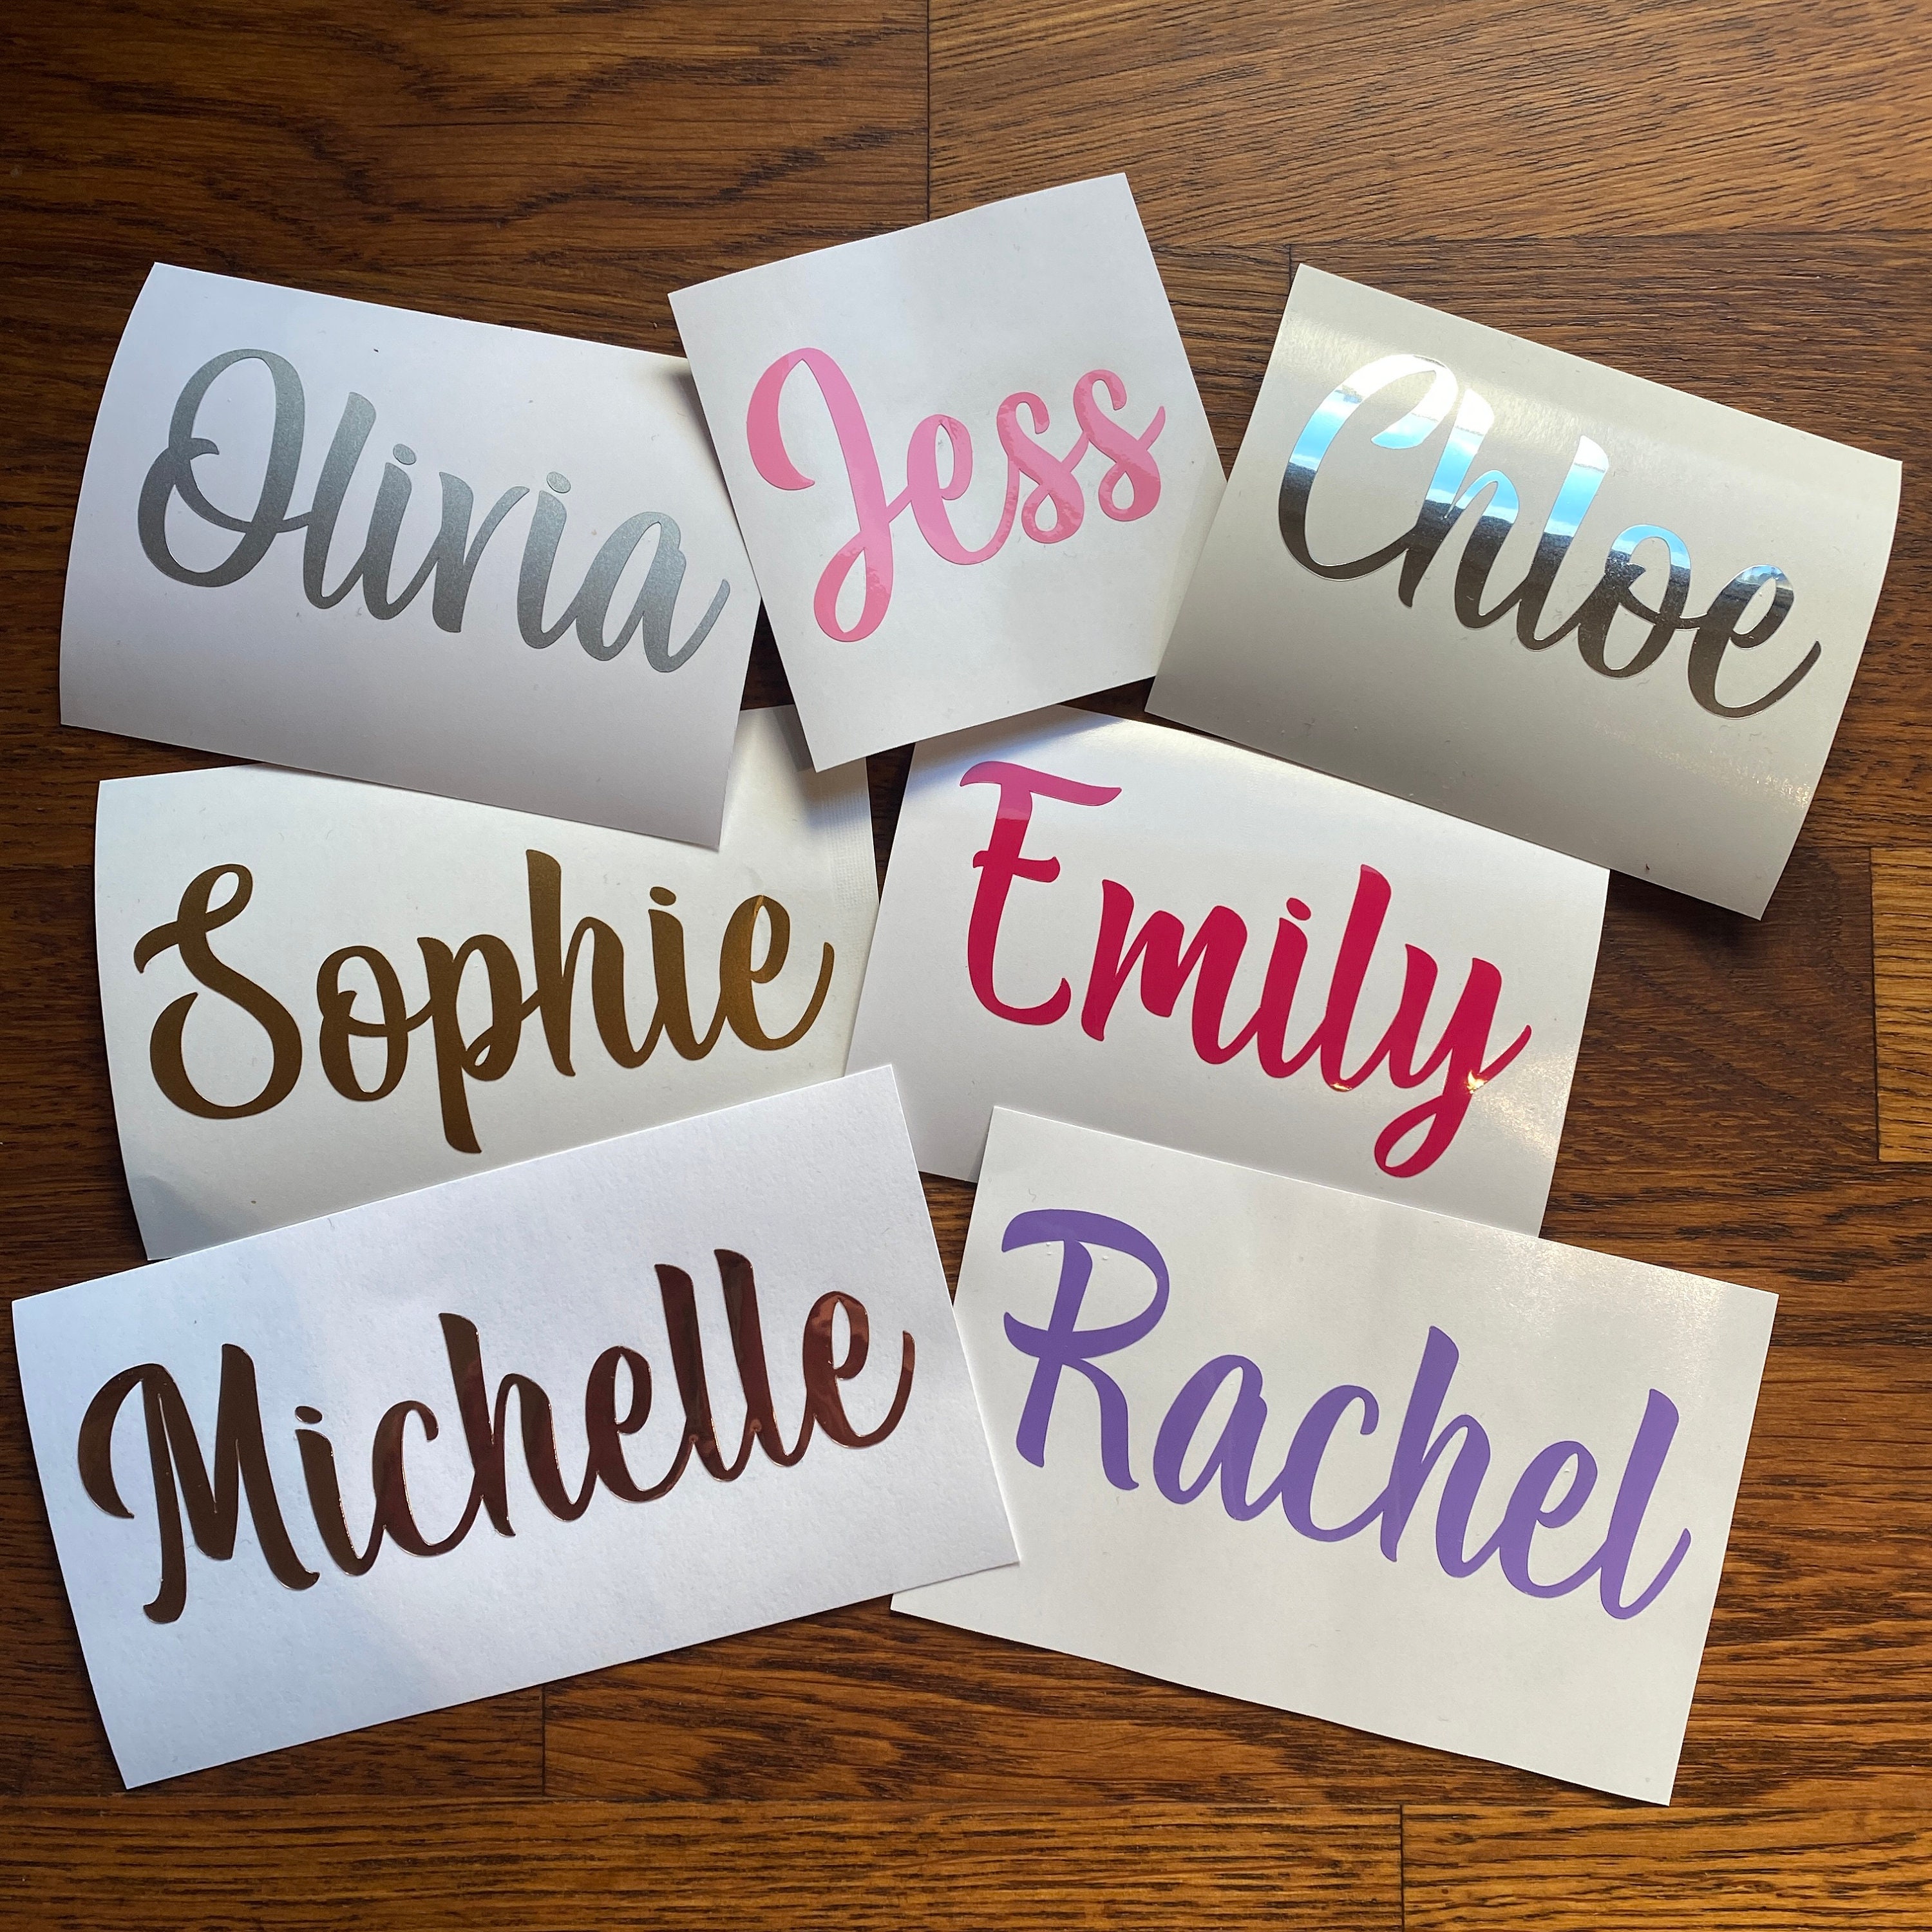 I Do - for Wedding - Scrapbook Sticker Sheet Stickers Love, Wedding, – MISS  KATE